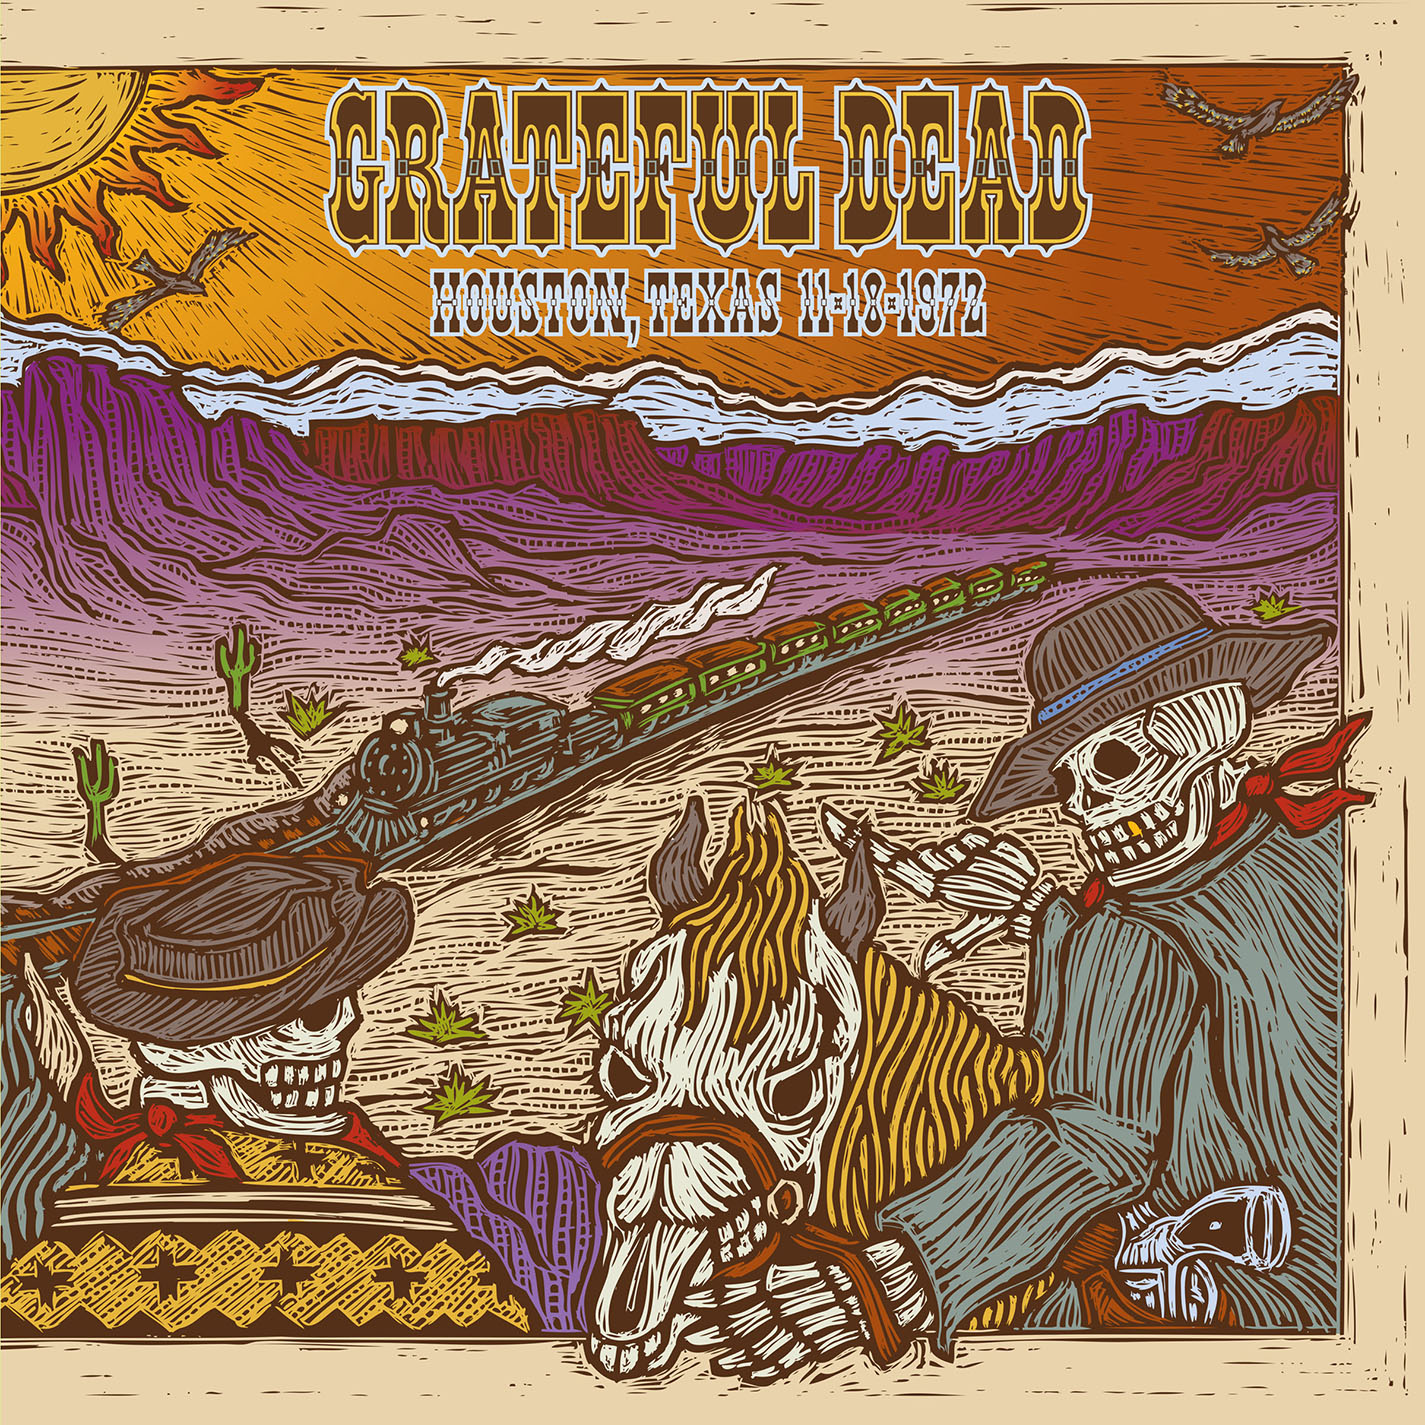 Grateful Dead Houston TX 11/18/72 album cover artwork